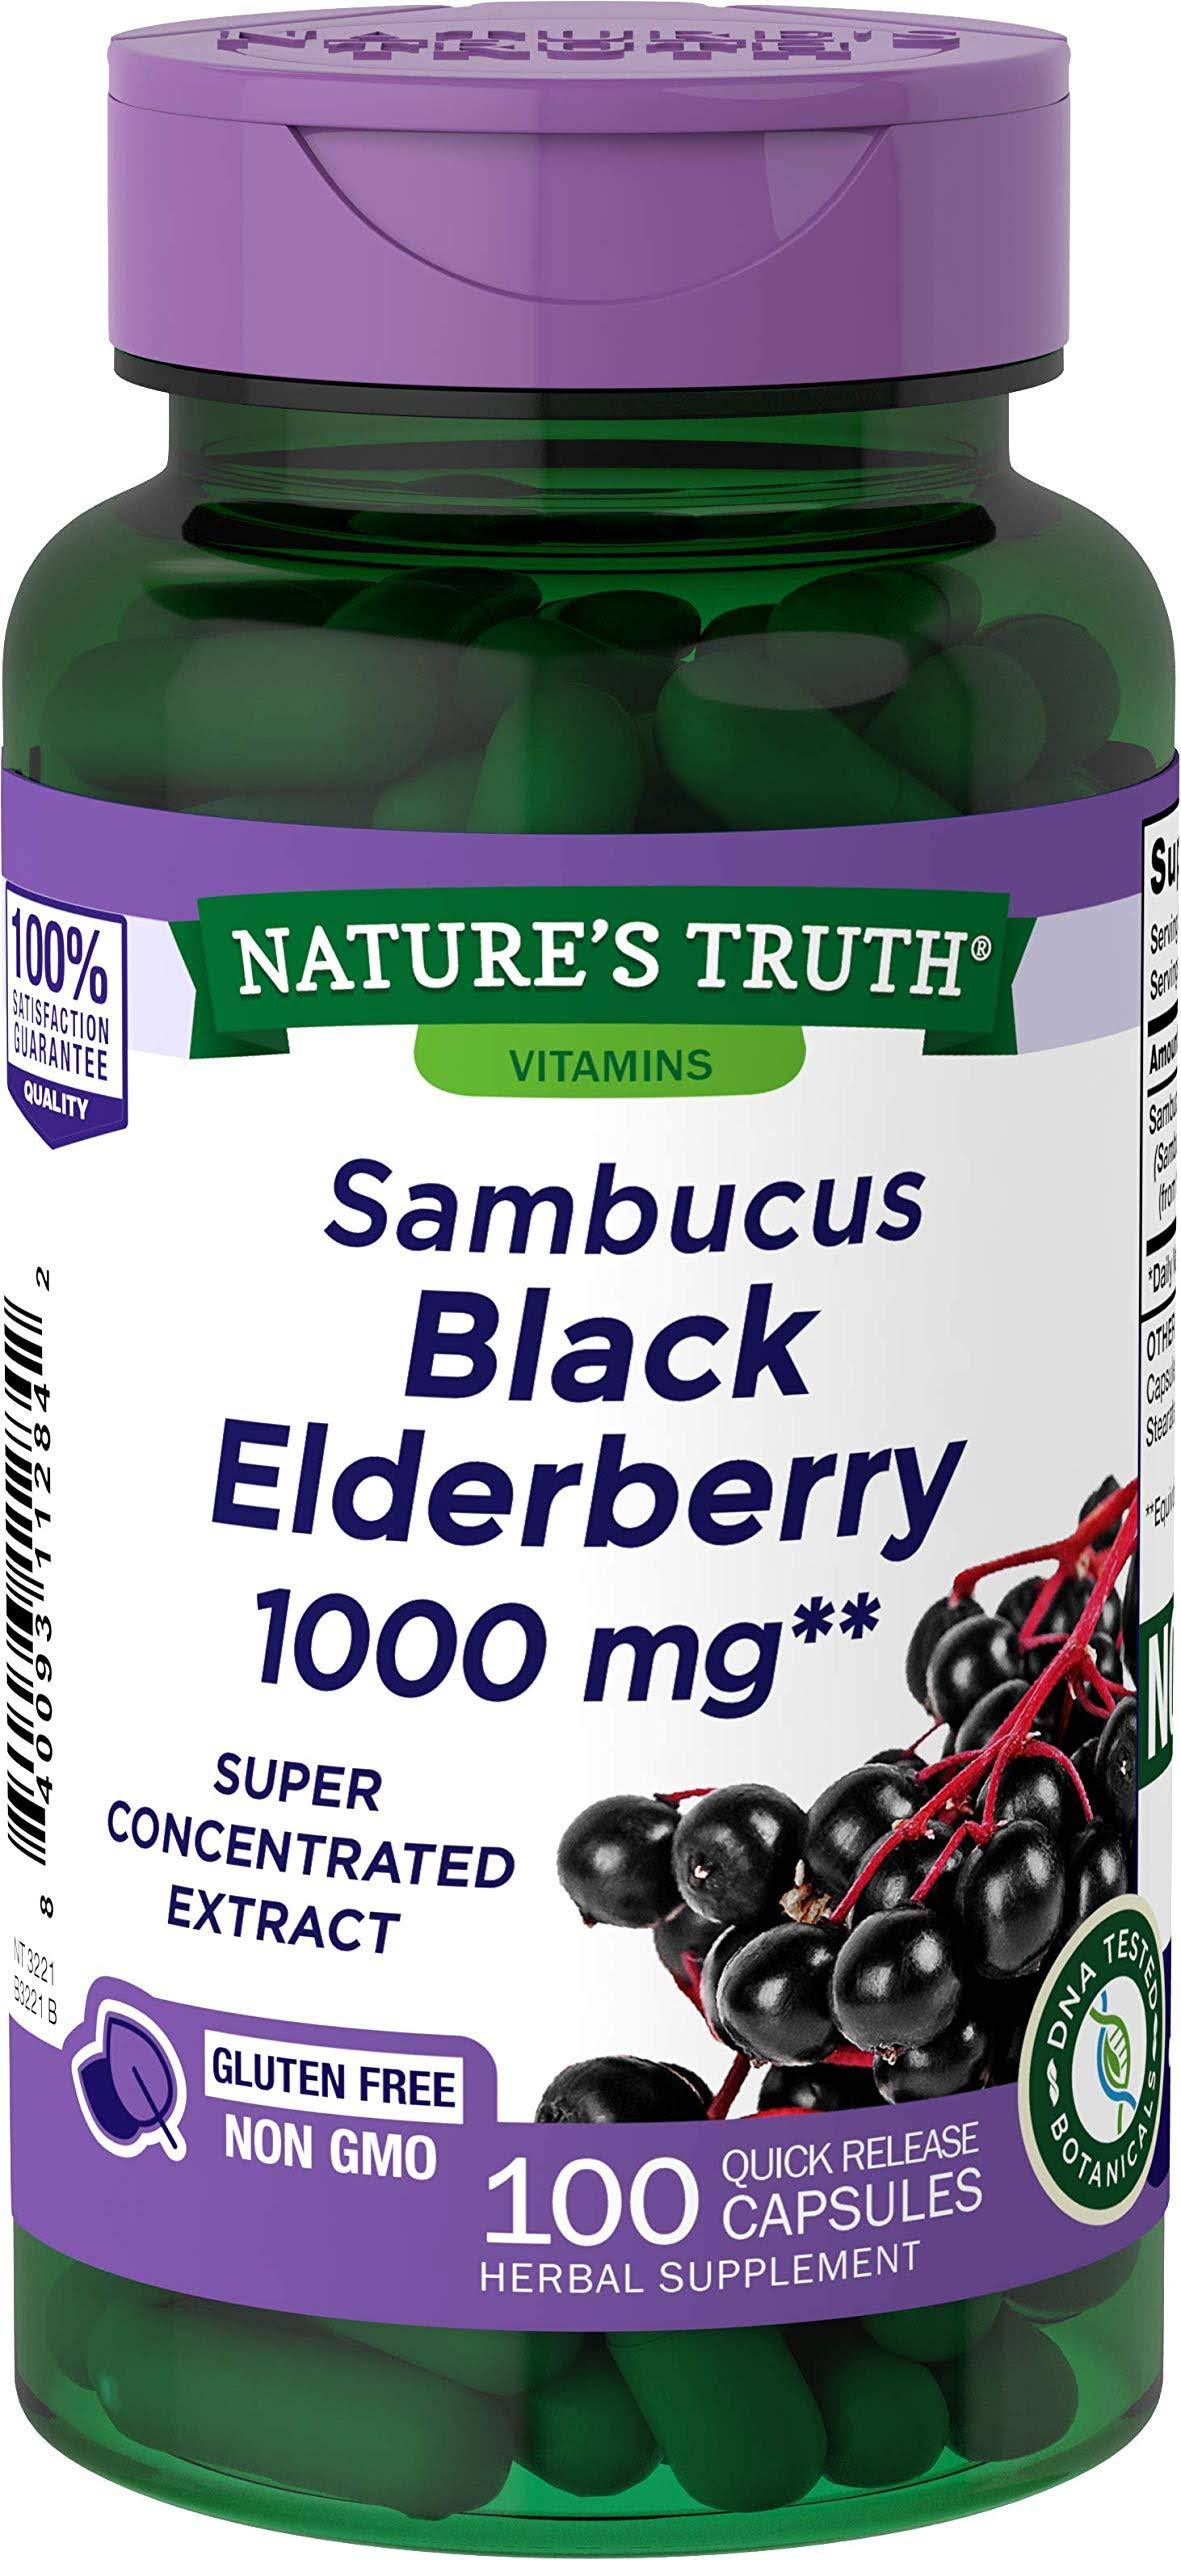 Nature's Truth Sambucus Black Elderberry, 1000 mg, Capsules, 100 EA